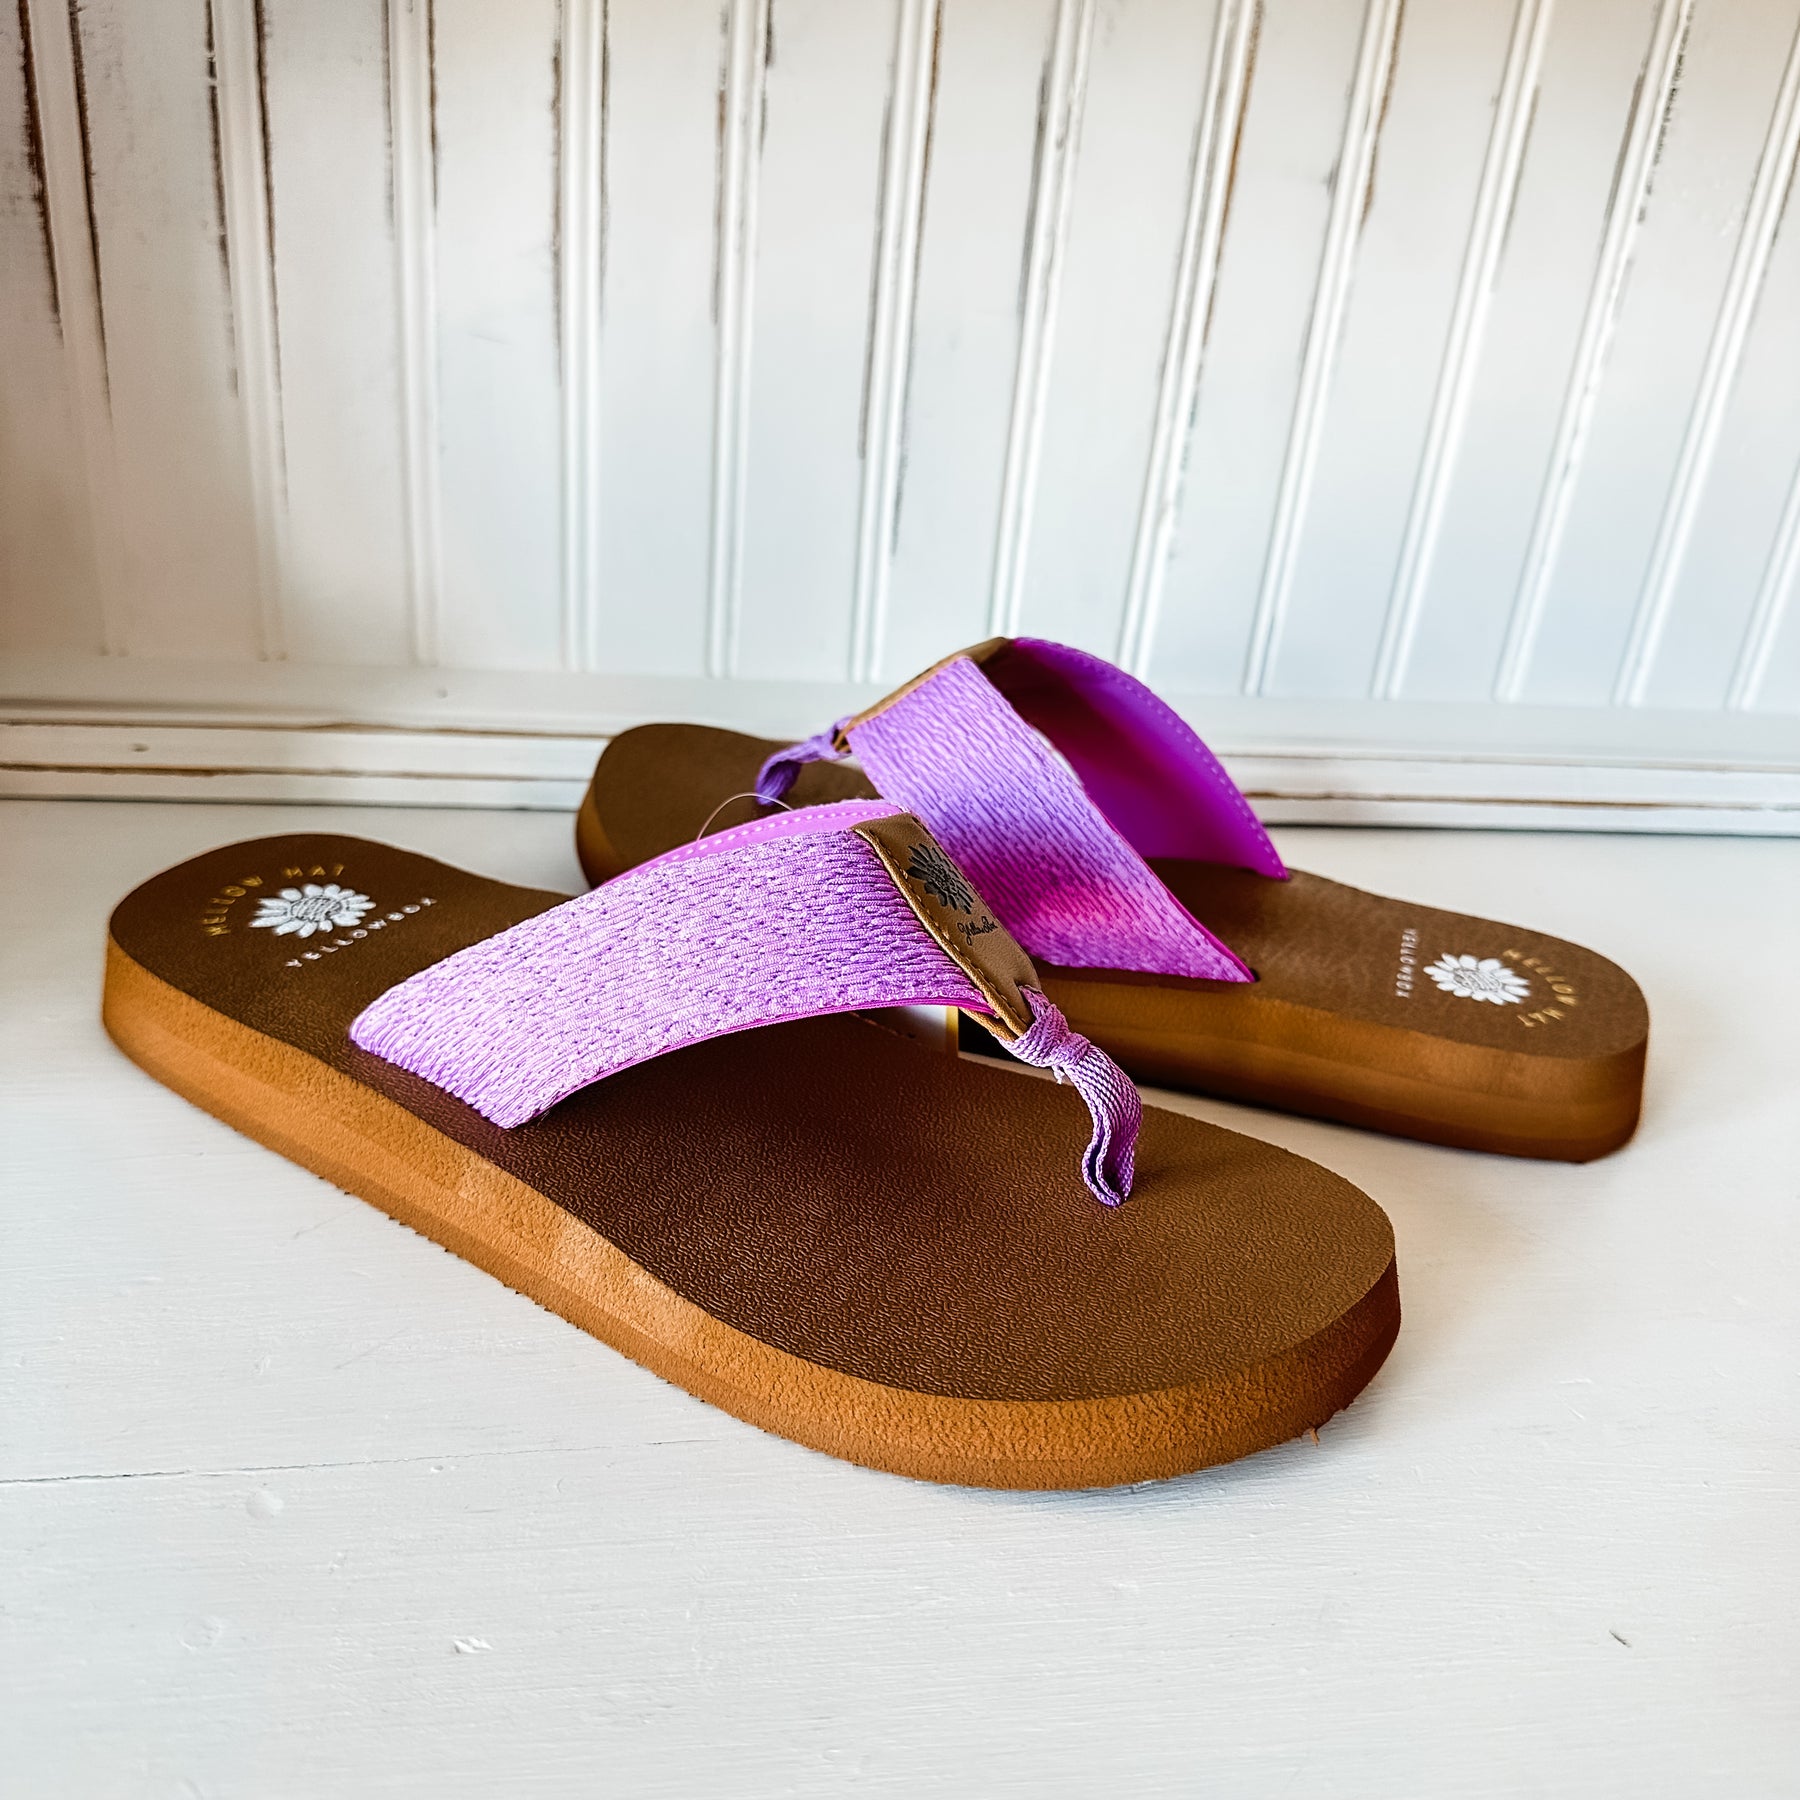 Nessie Flip Flop Sandal - Purple